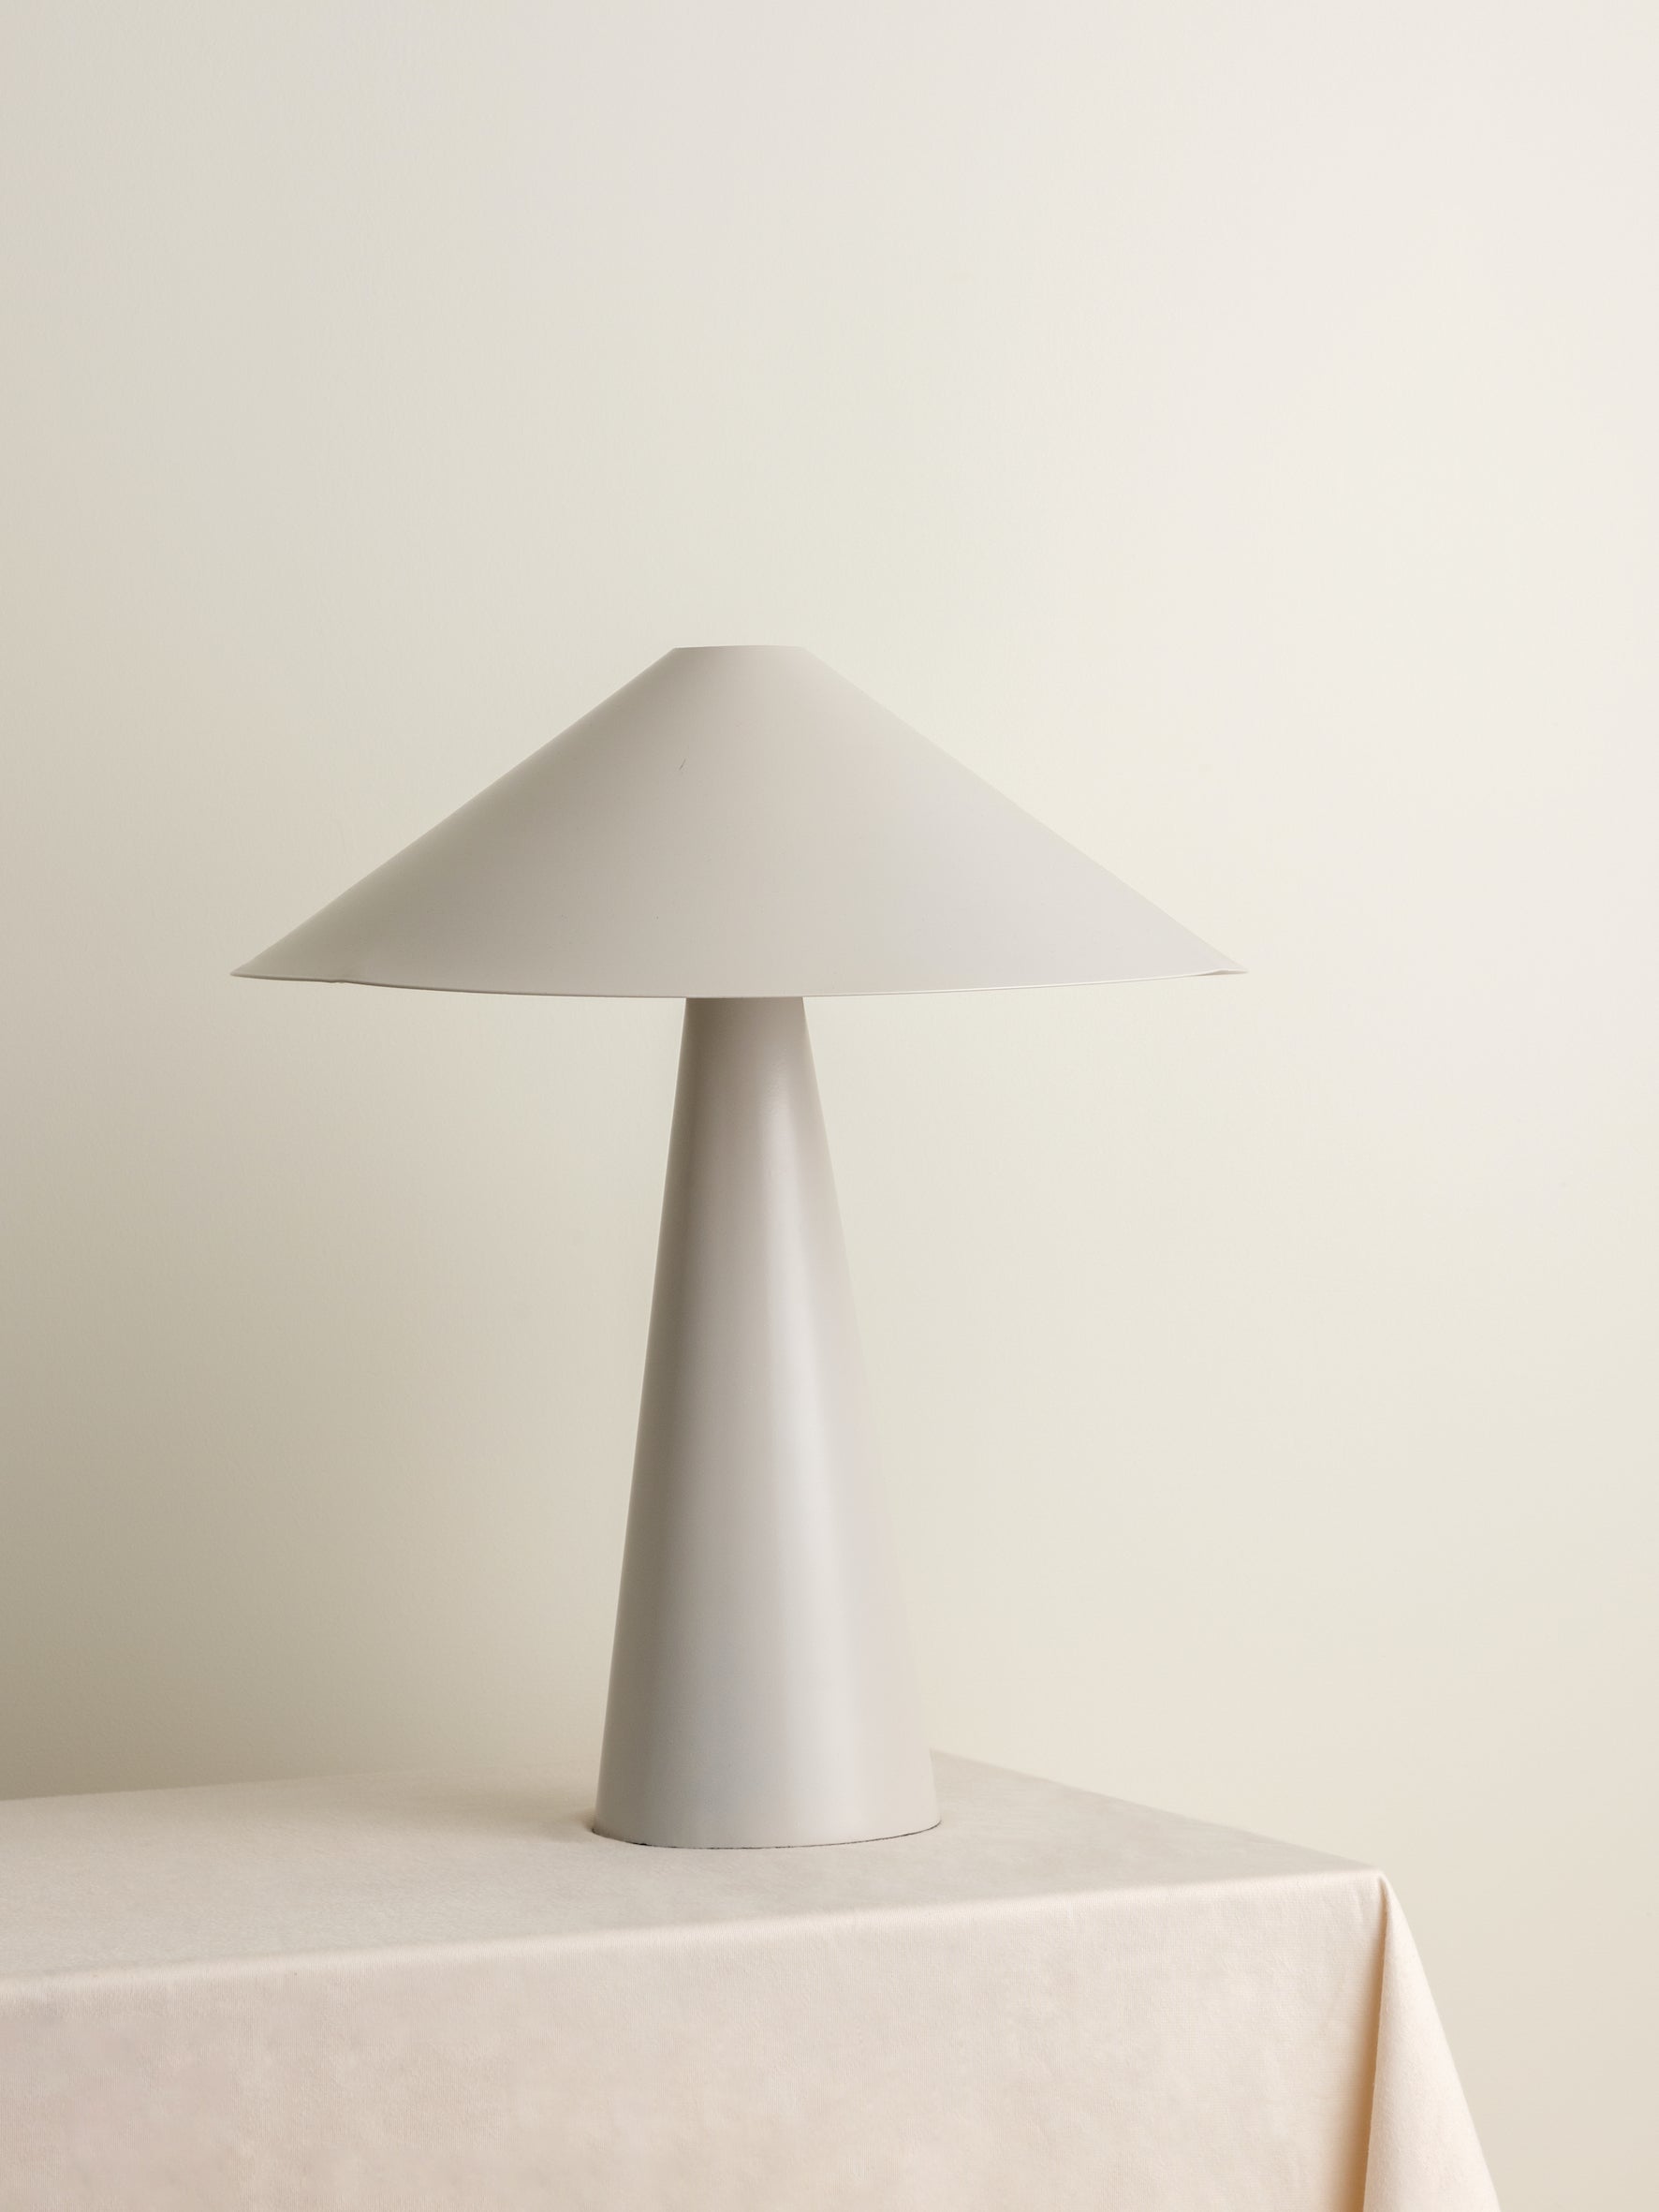 Orta - 1 light warm white cone table lamp | Table Lamp | Lights & Lamps | UK | Modern Affordable Designer Lighting